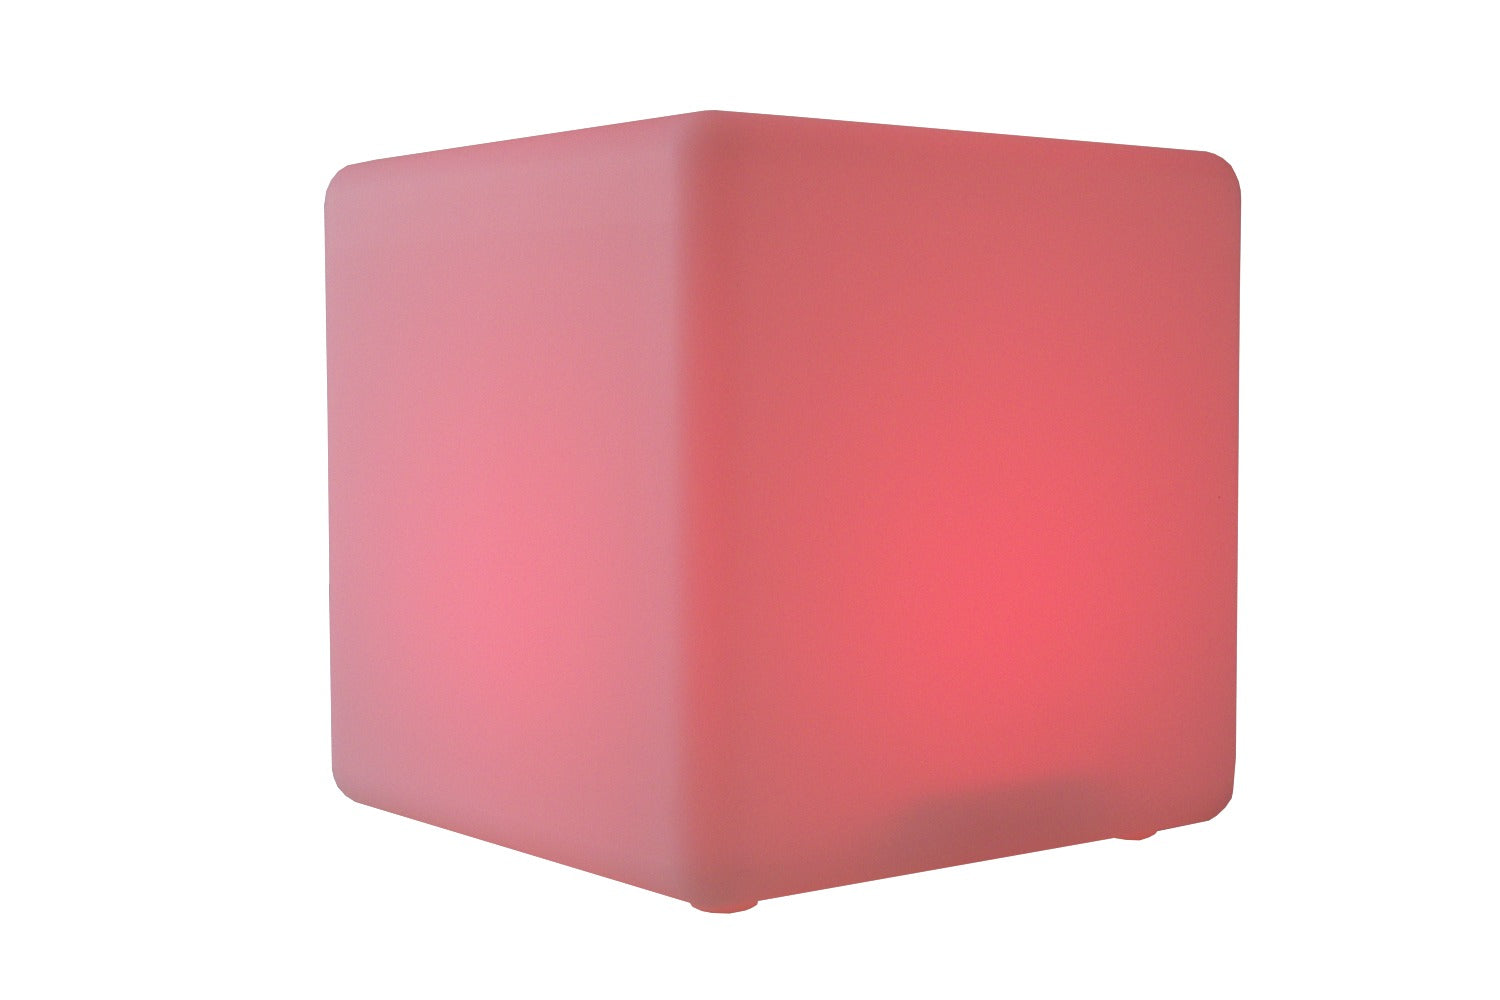 CUBECHAIR40 - LED cube chair seat 40x40x40cm